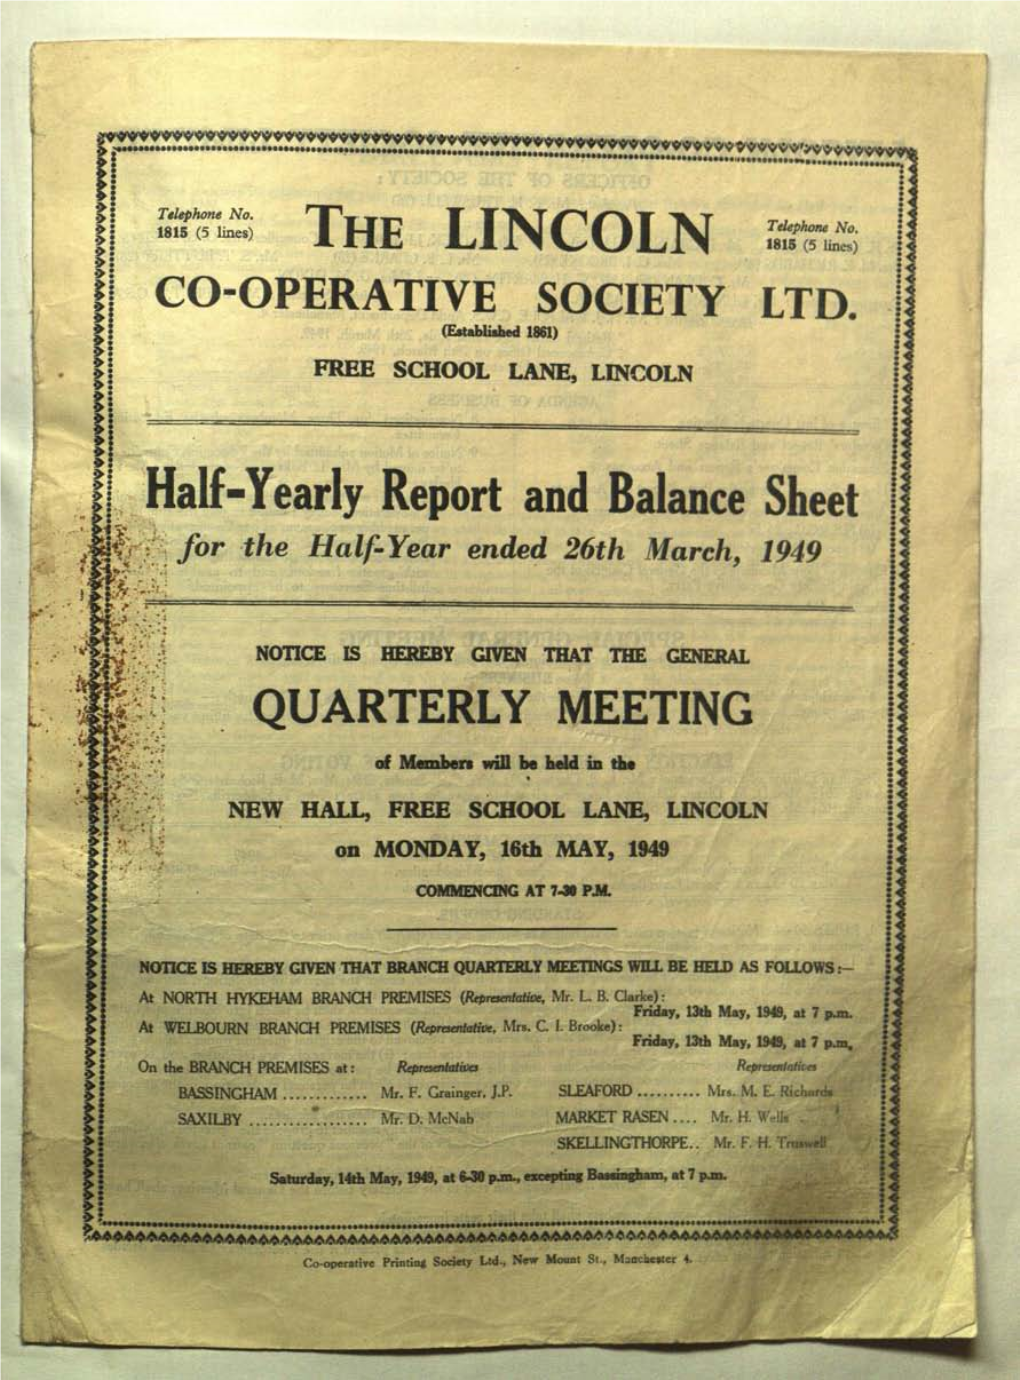 The Lincoln Co-Operative Society Ltd